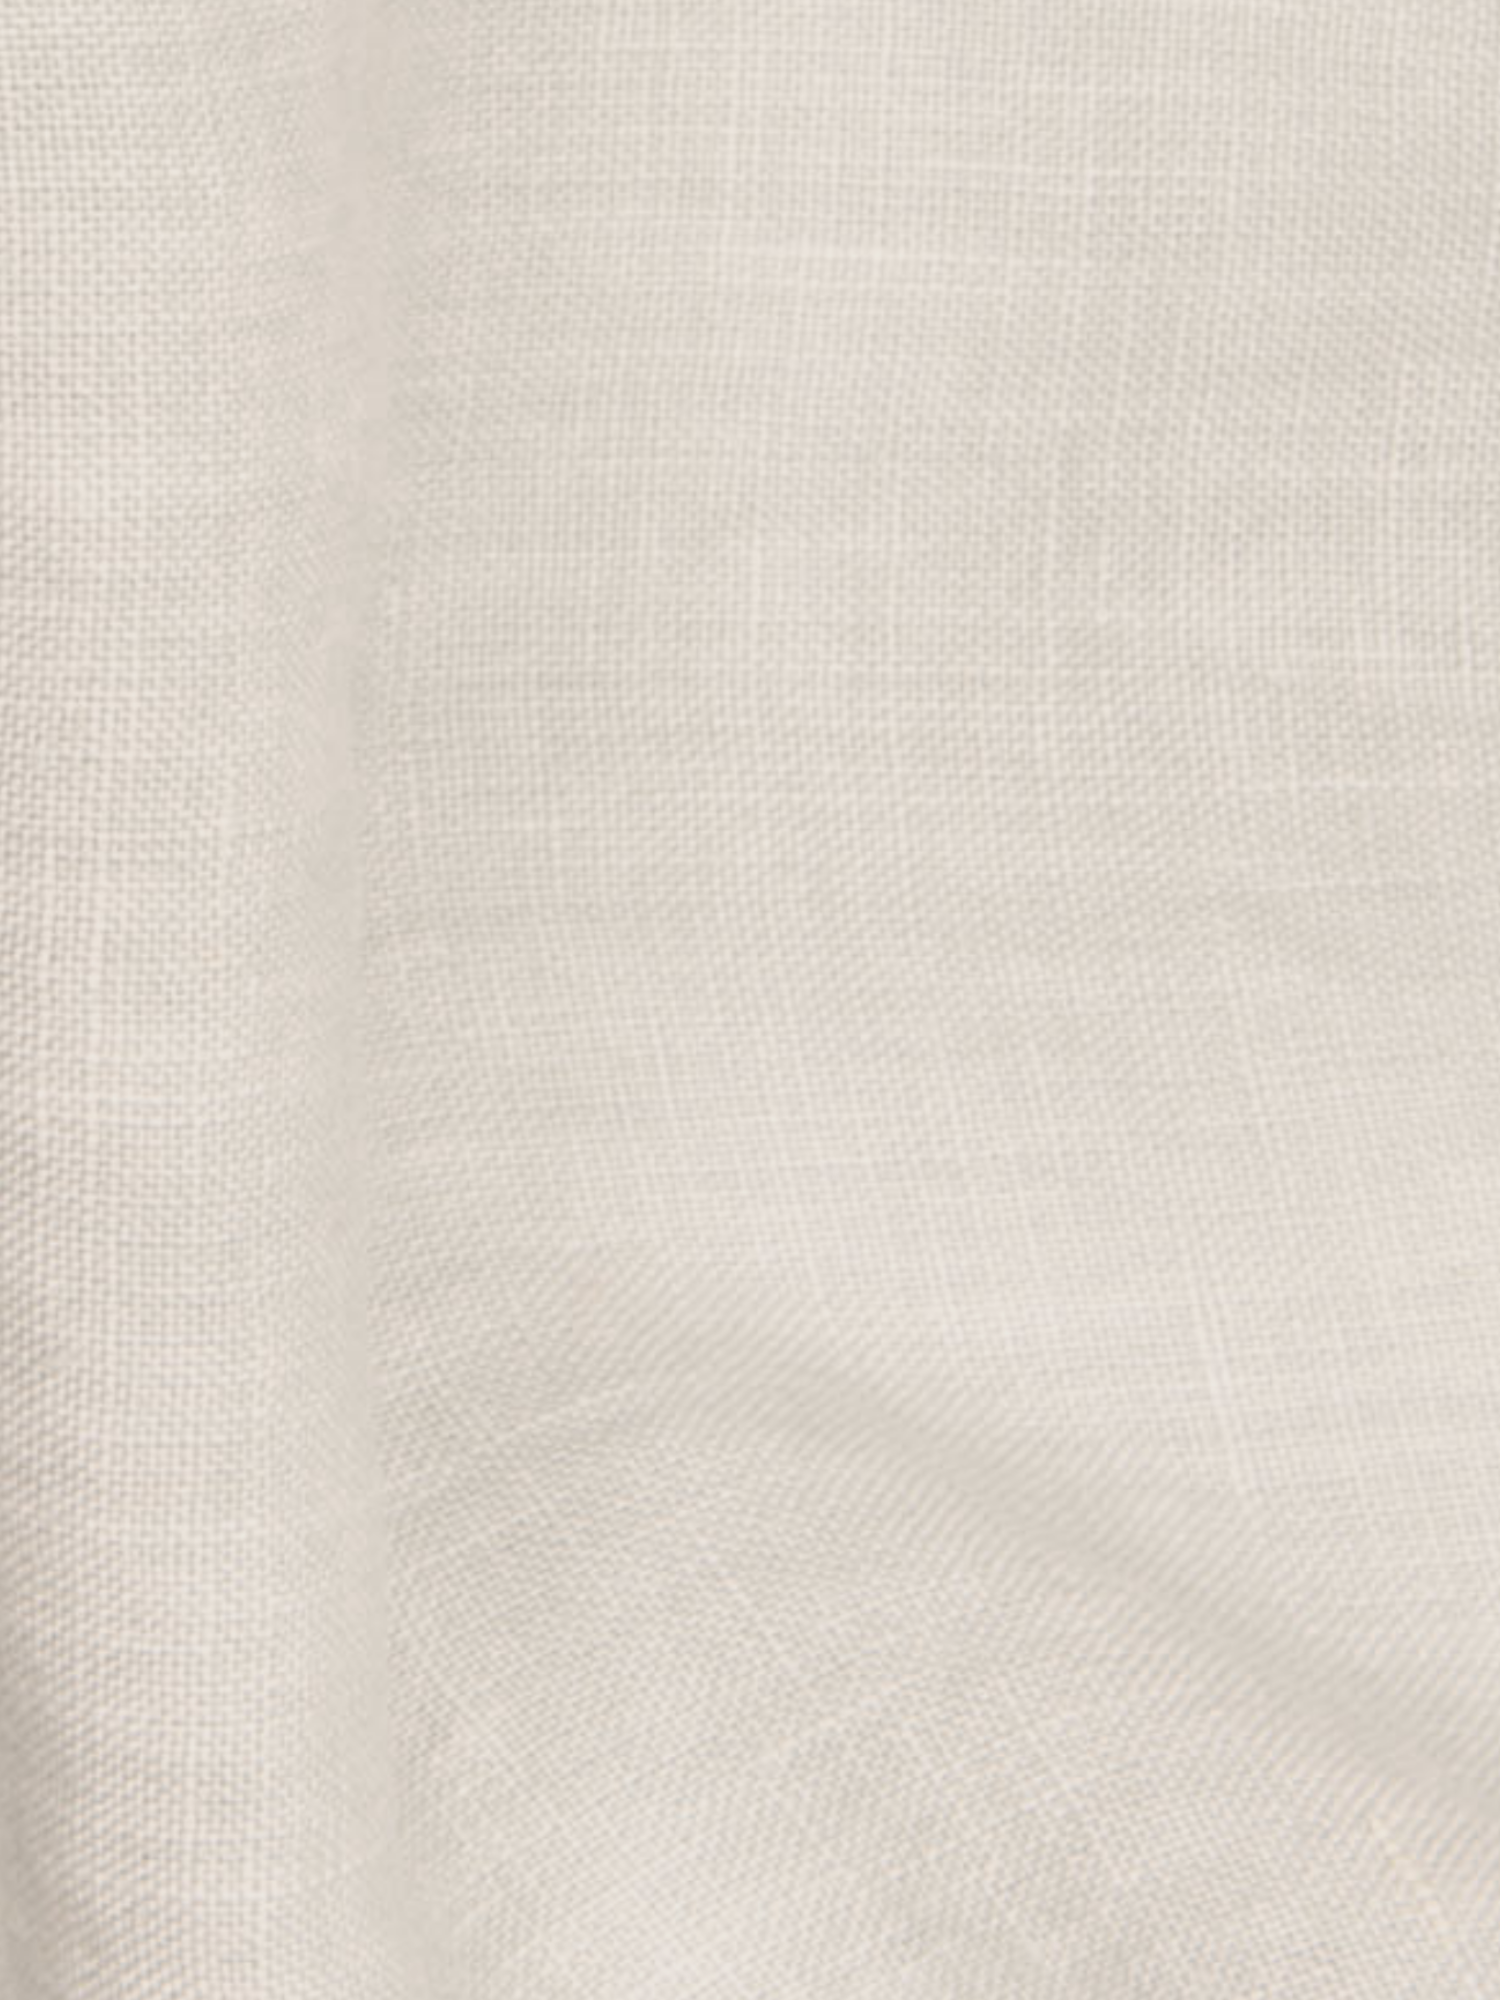 Linen Shower curtain in Cream color Dusty Linen